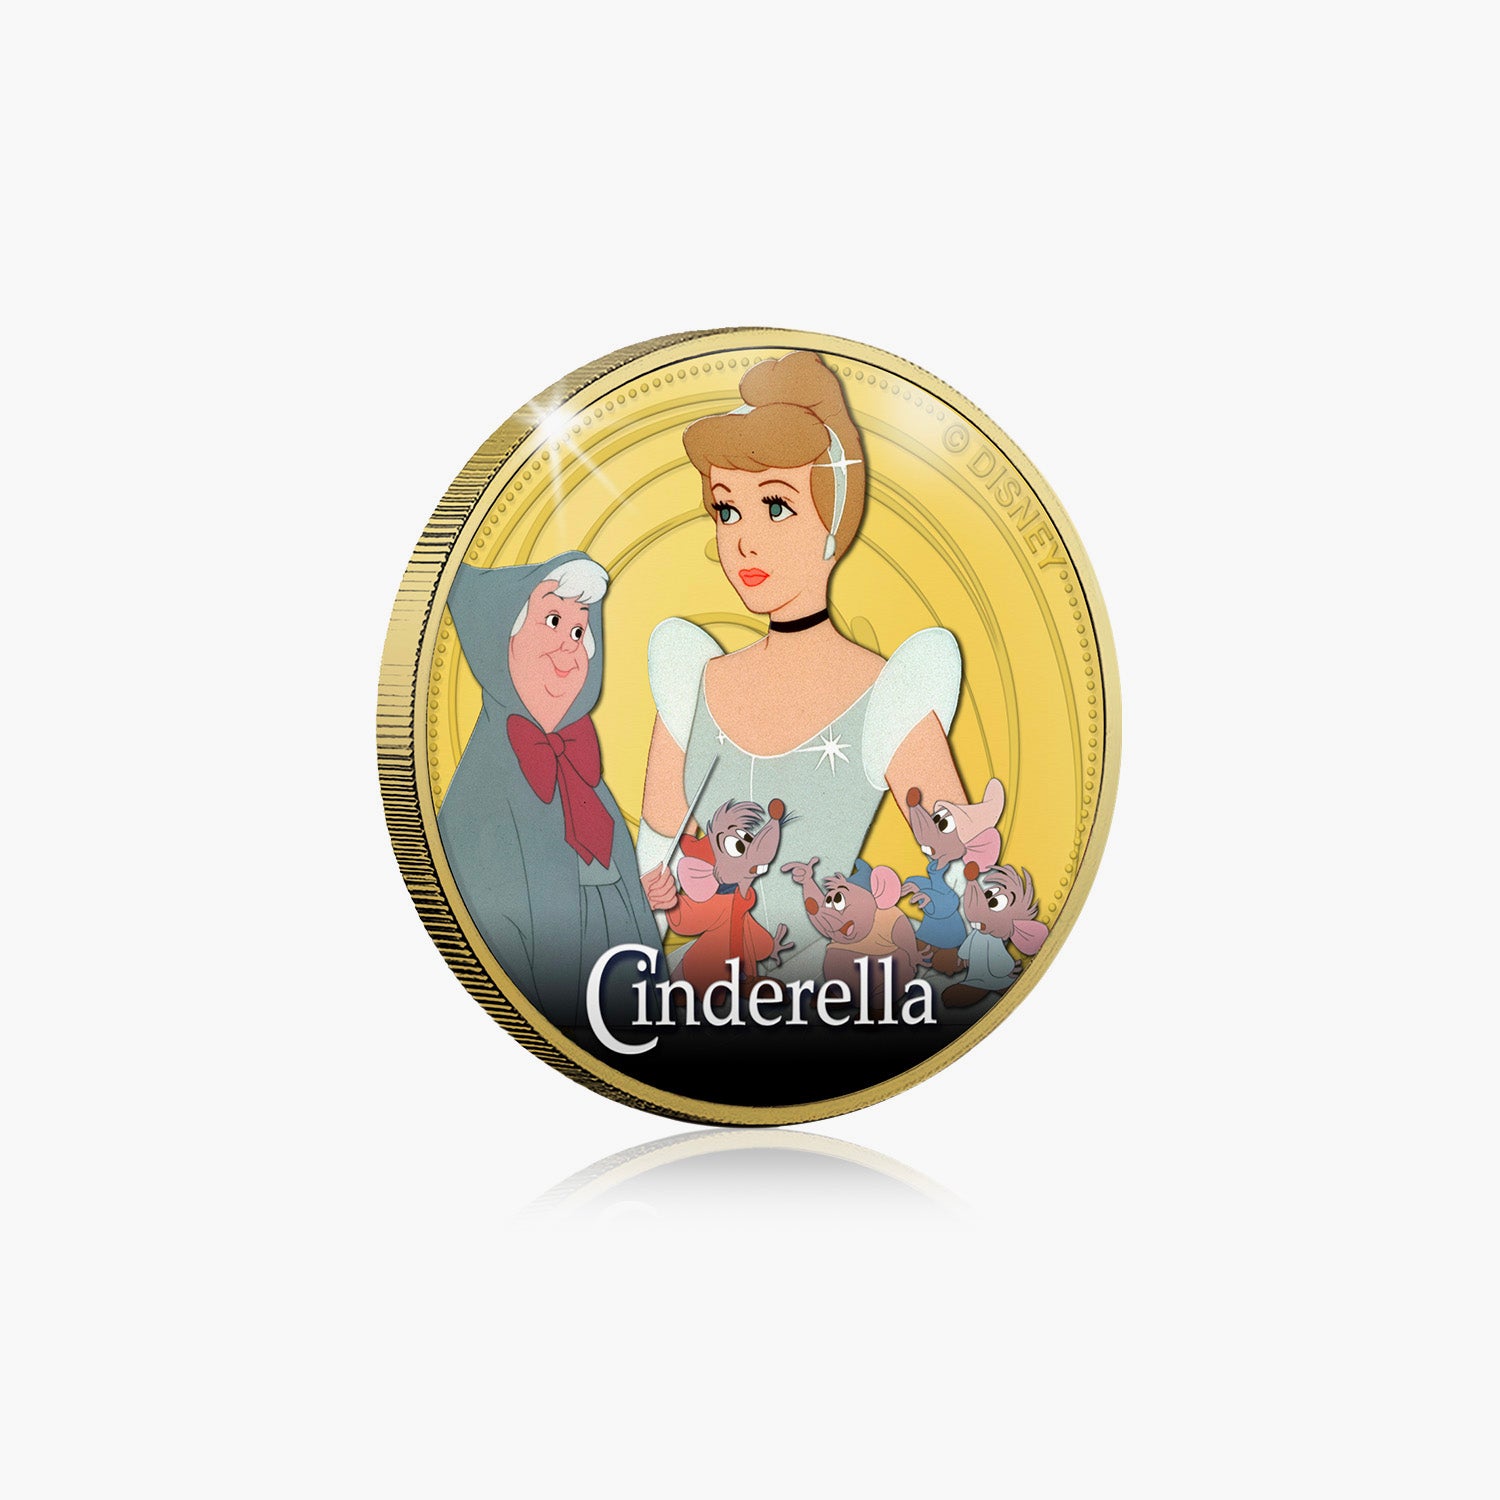 Cinderella Gold-Plated Commemorative